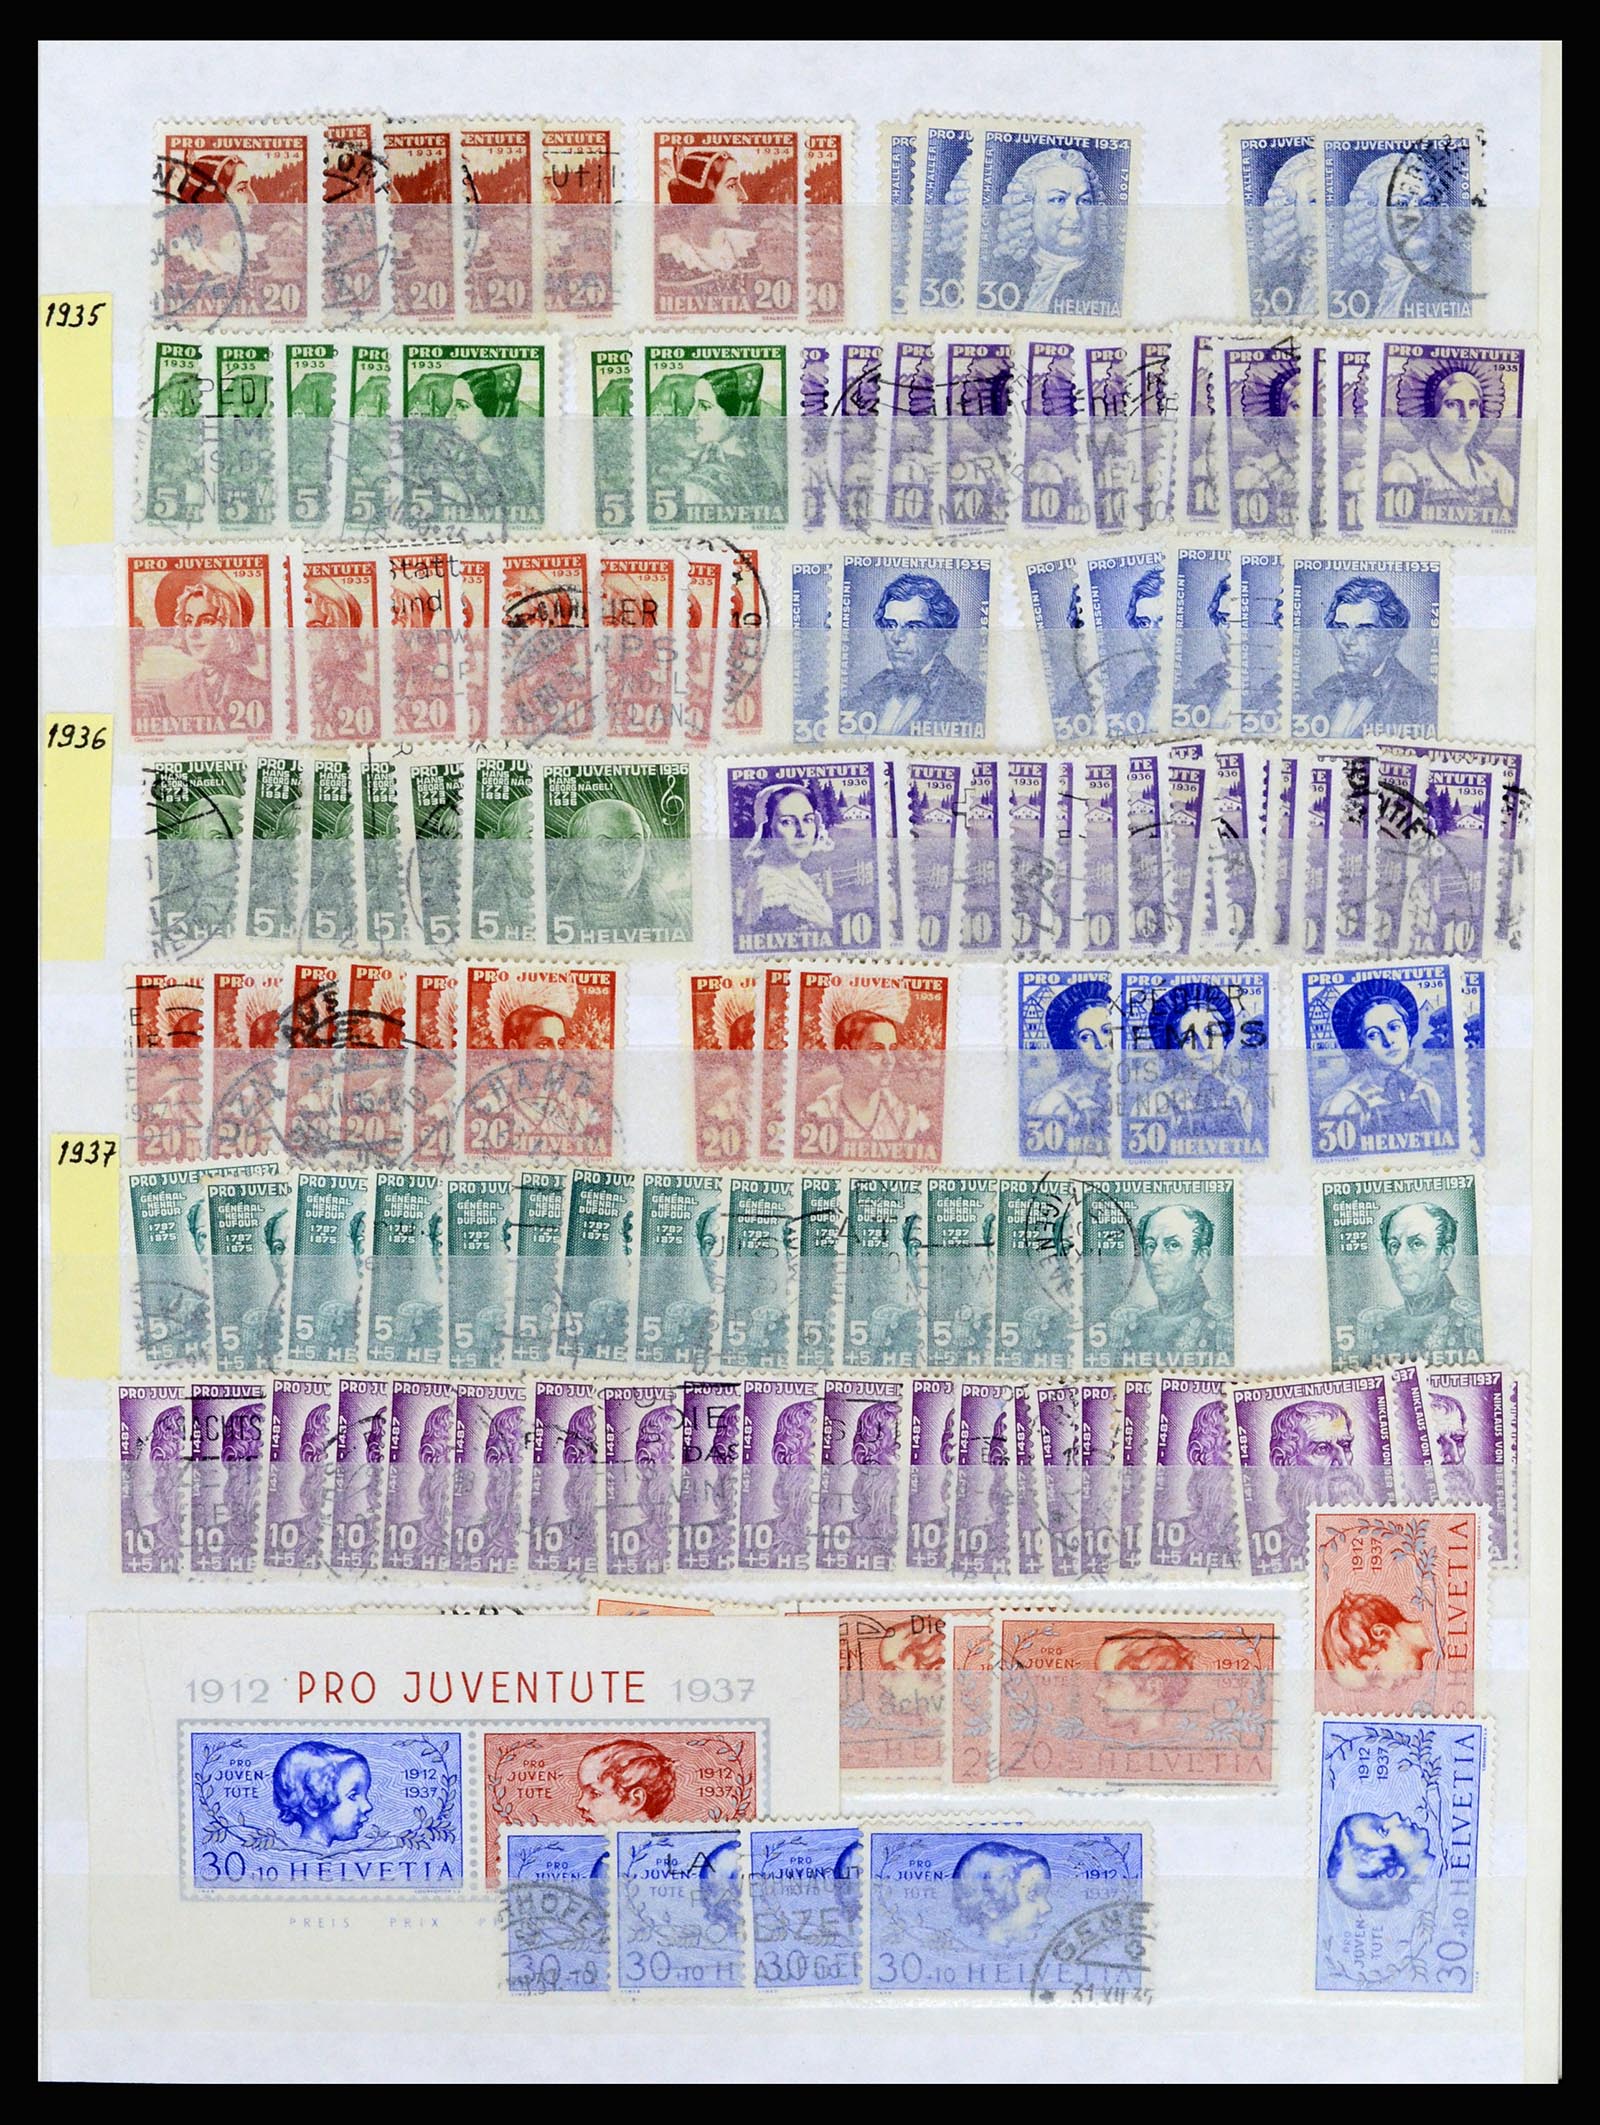 37061 005 - Stamp collection 37061 Switzerland 1913-2000.